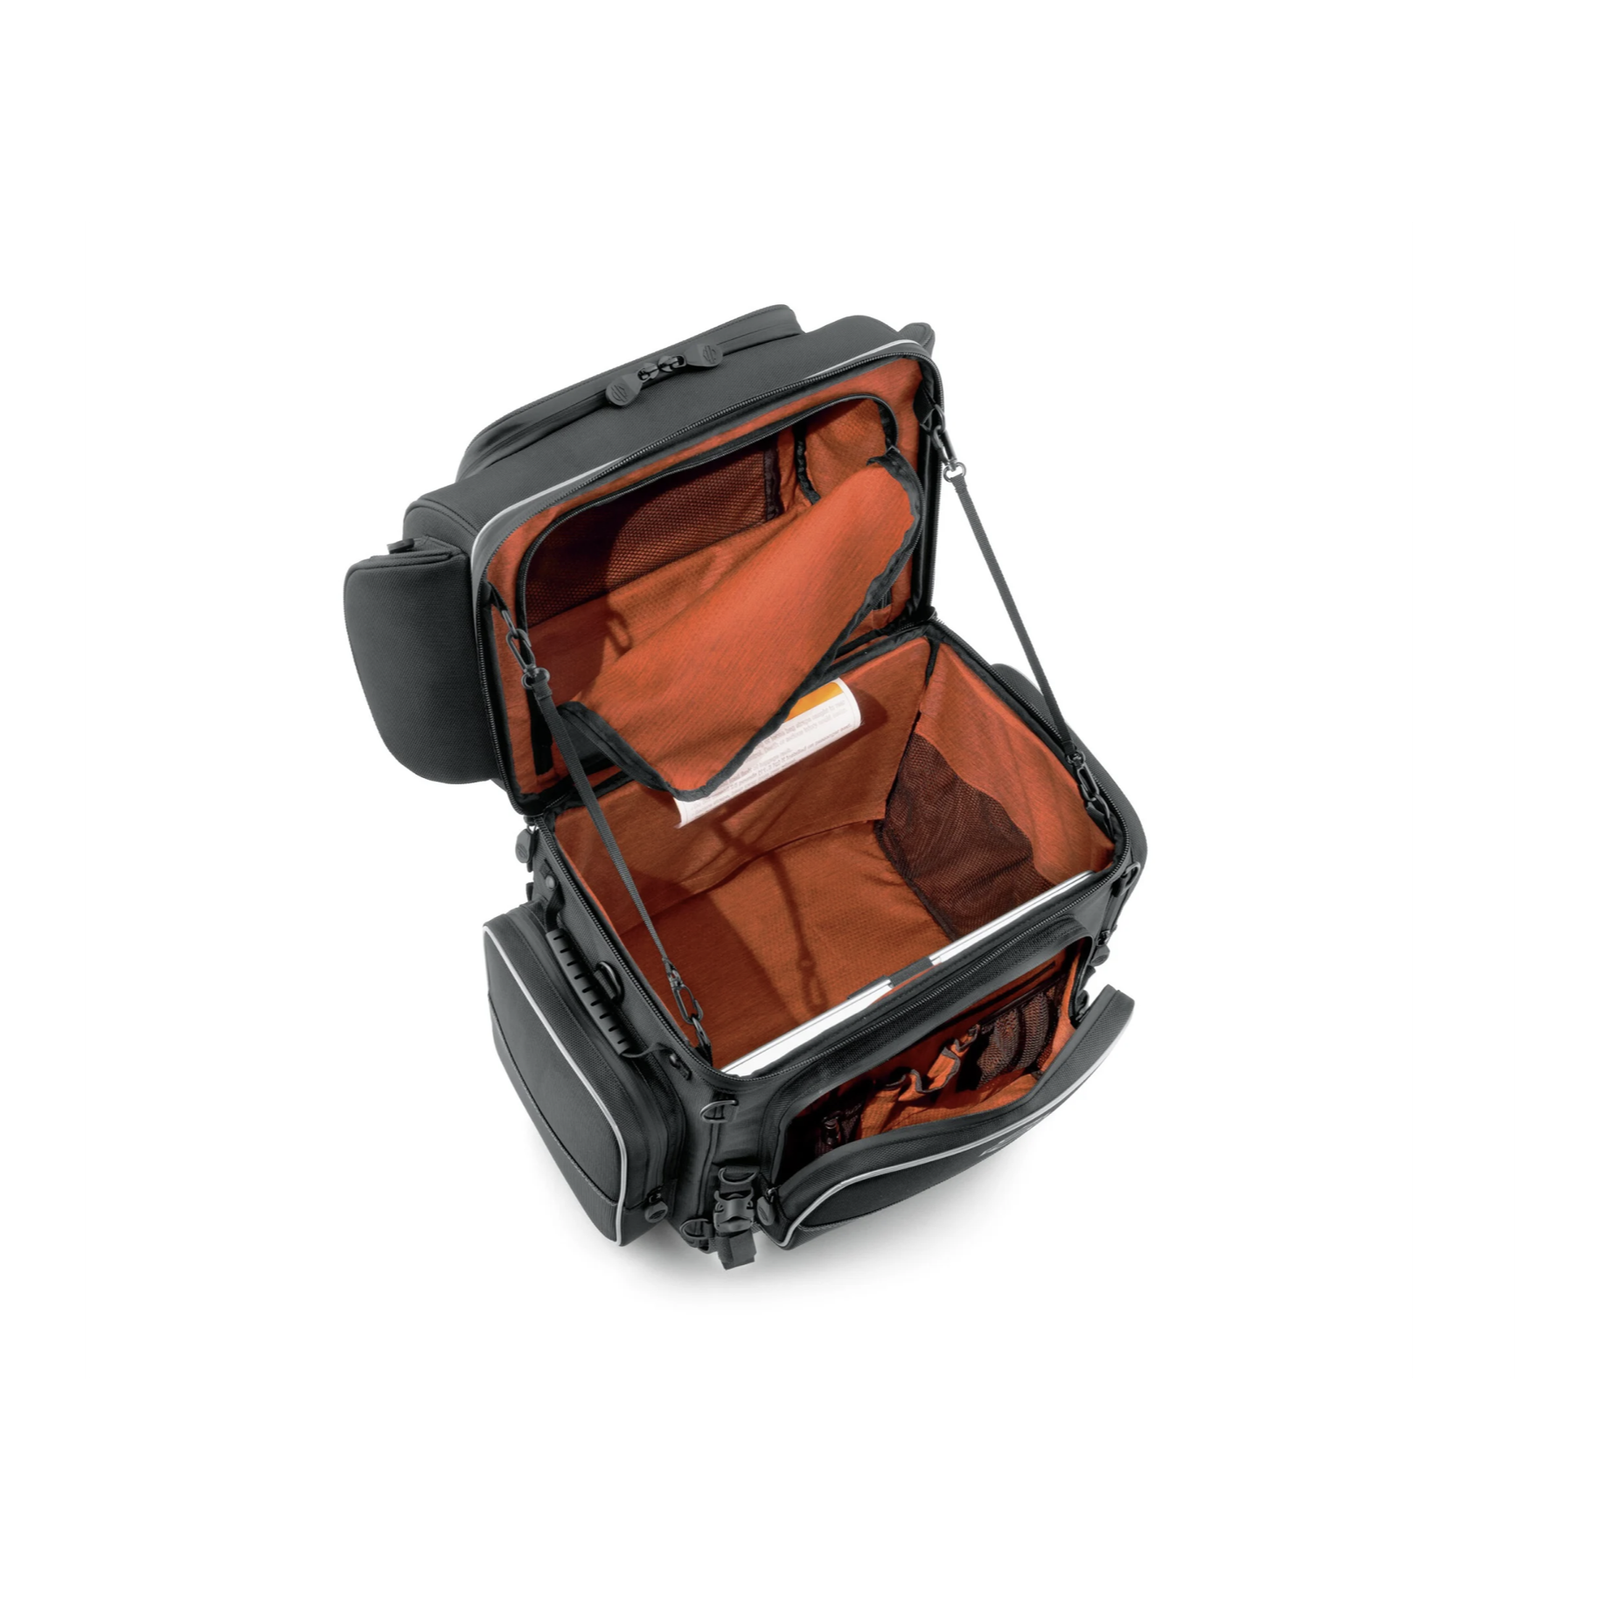 Onyx Premium Luggage Touring Bag